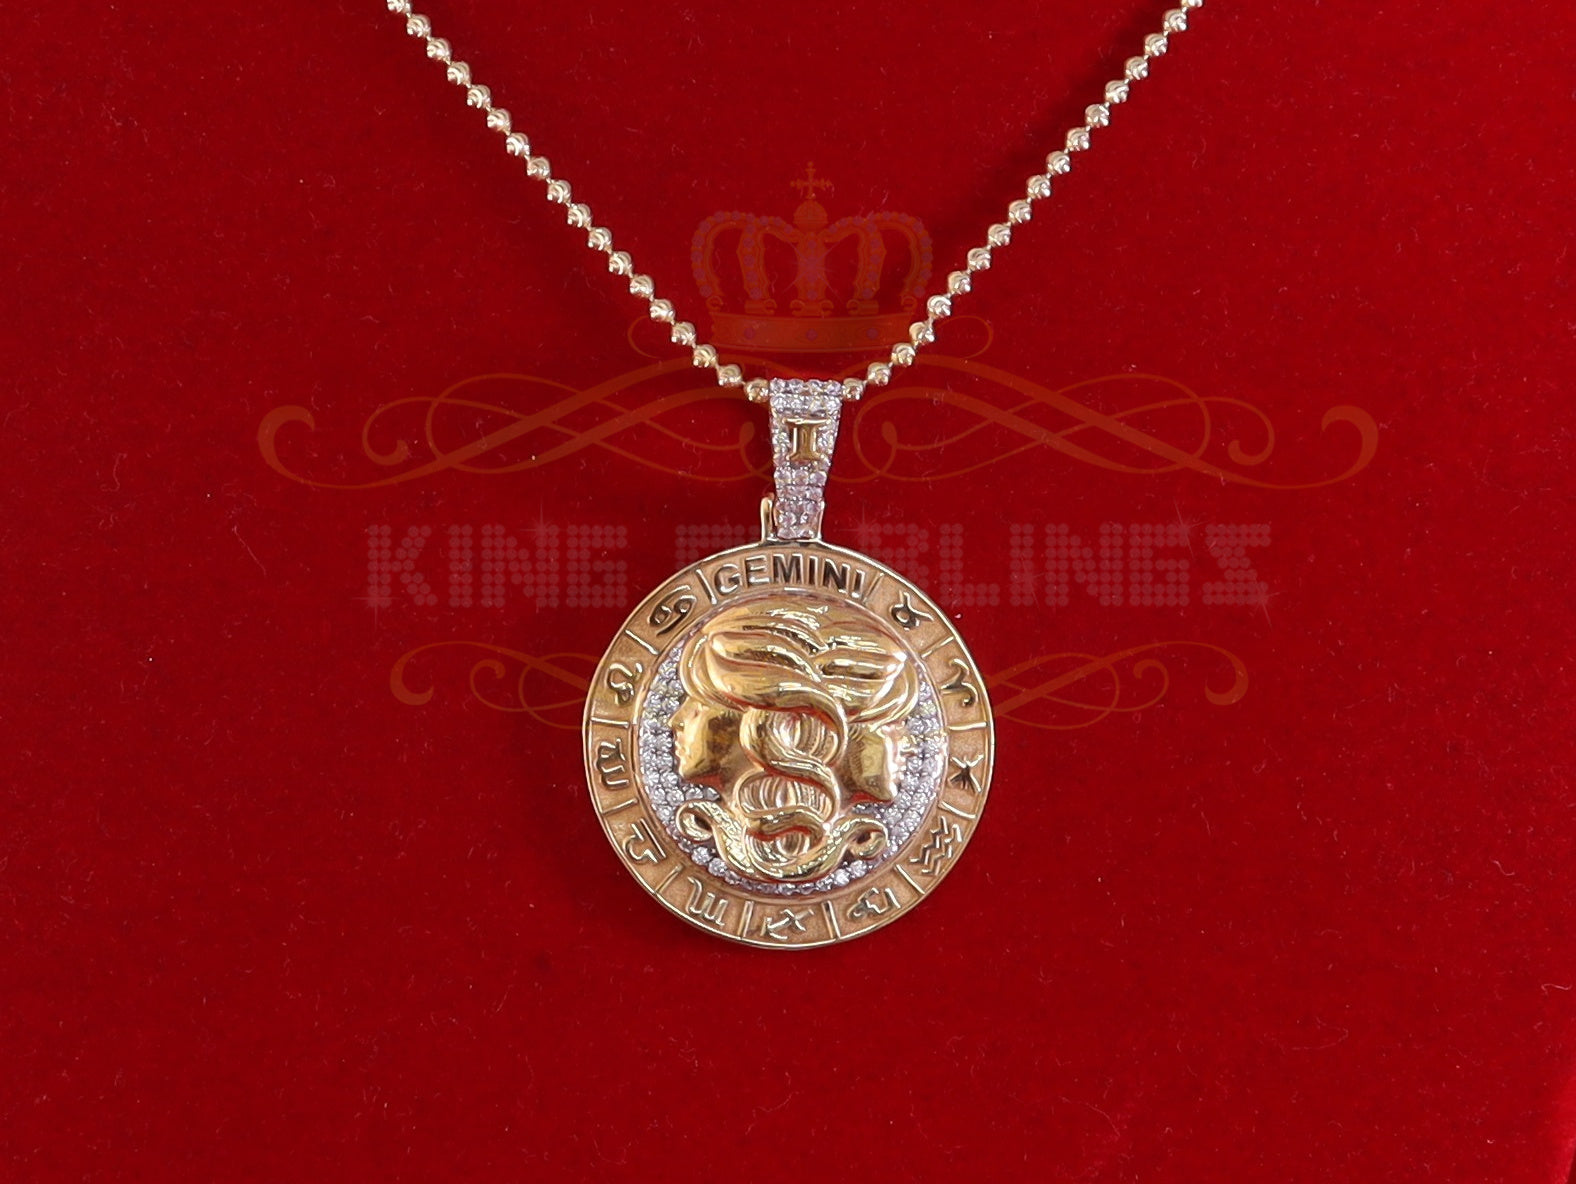 2.23ct Cubic Zirconia Sterling Yellow Silver GEMINI Pendant For Men's & Women's KING OF BLINGS